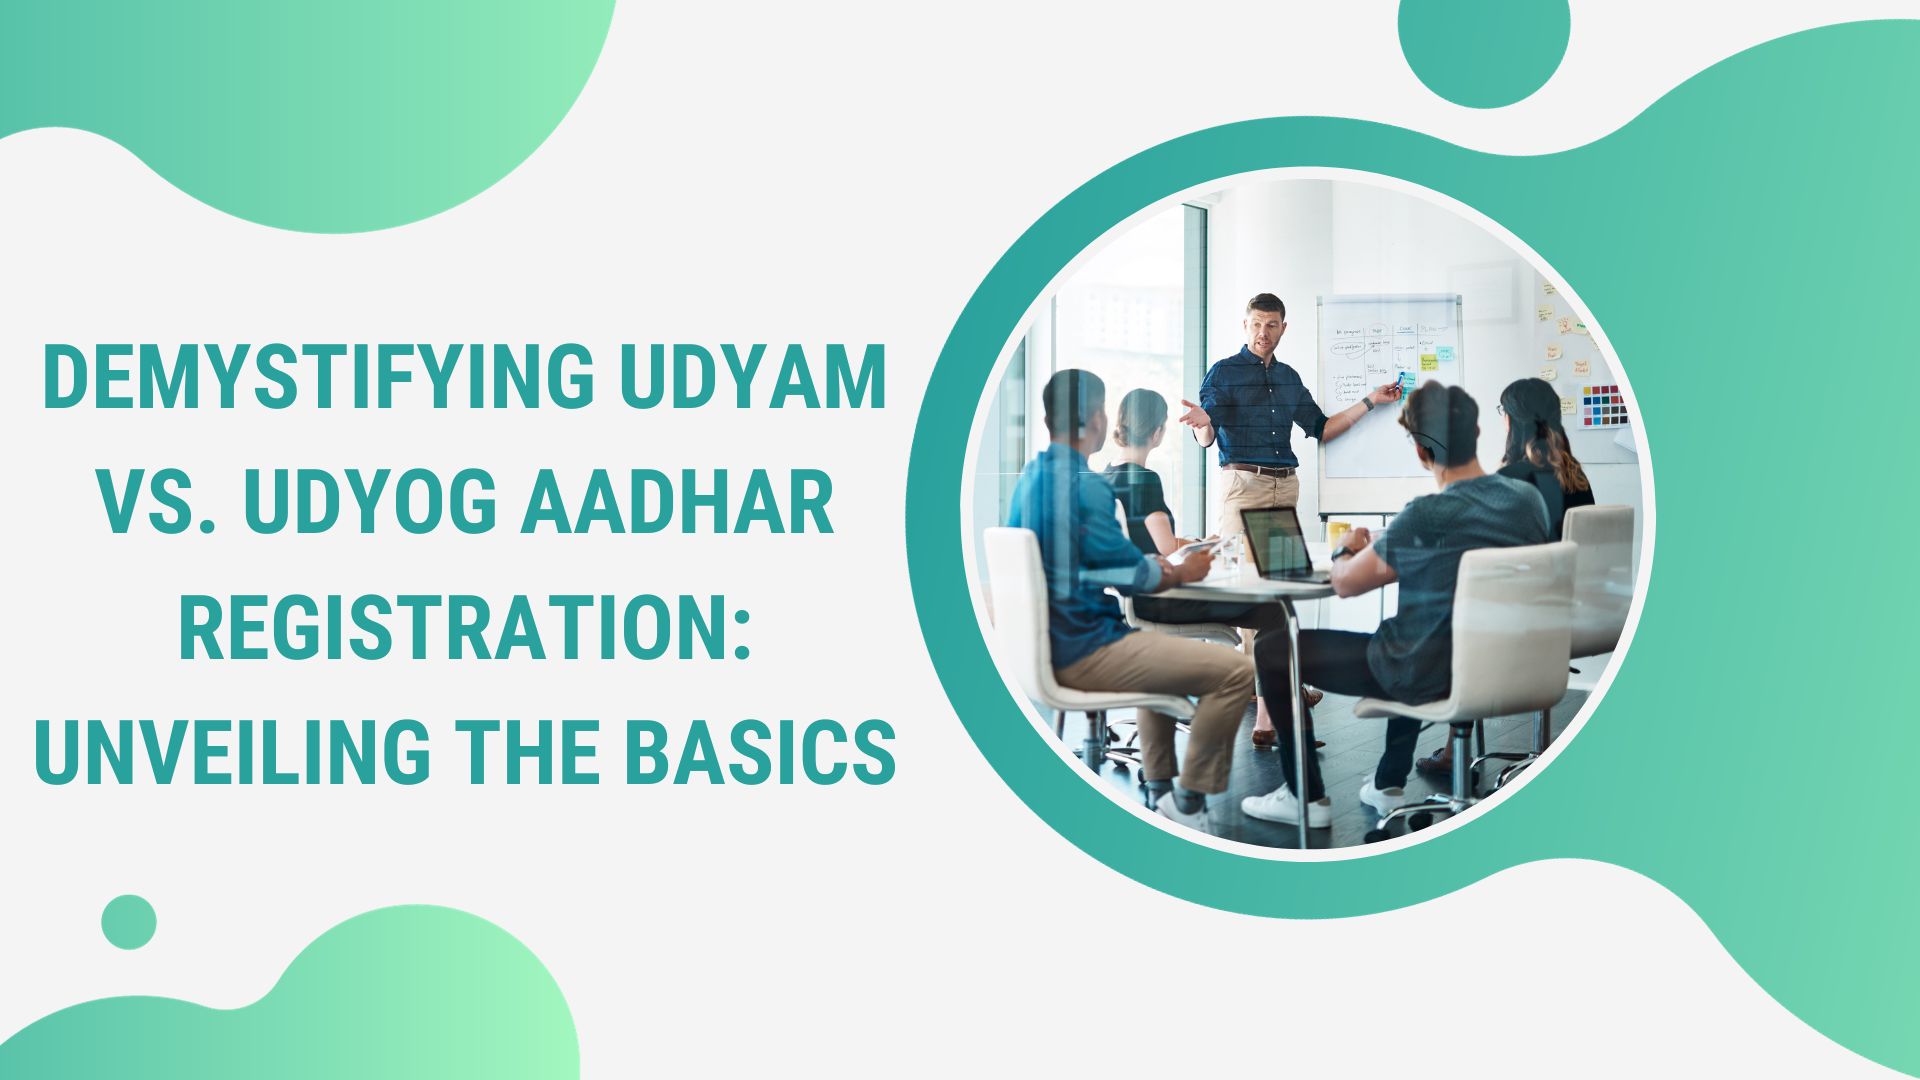 Demystifying Udyam vs. Udyog Aadhar Registration: Unveiling the Basics